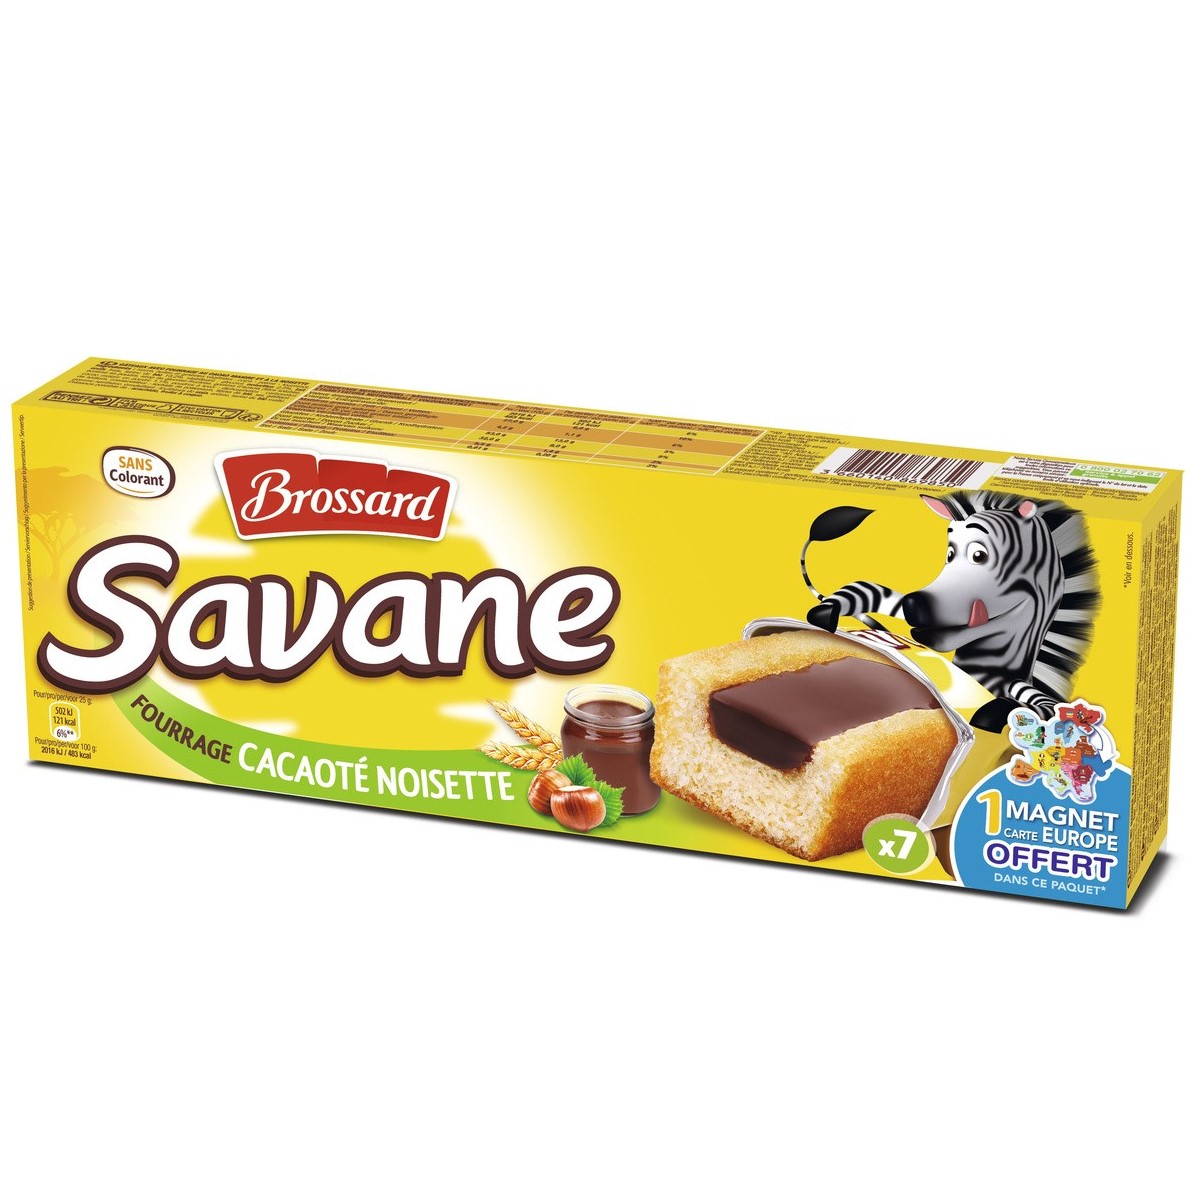 Savane Pocket Fourrage Cacao Noisette